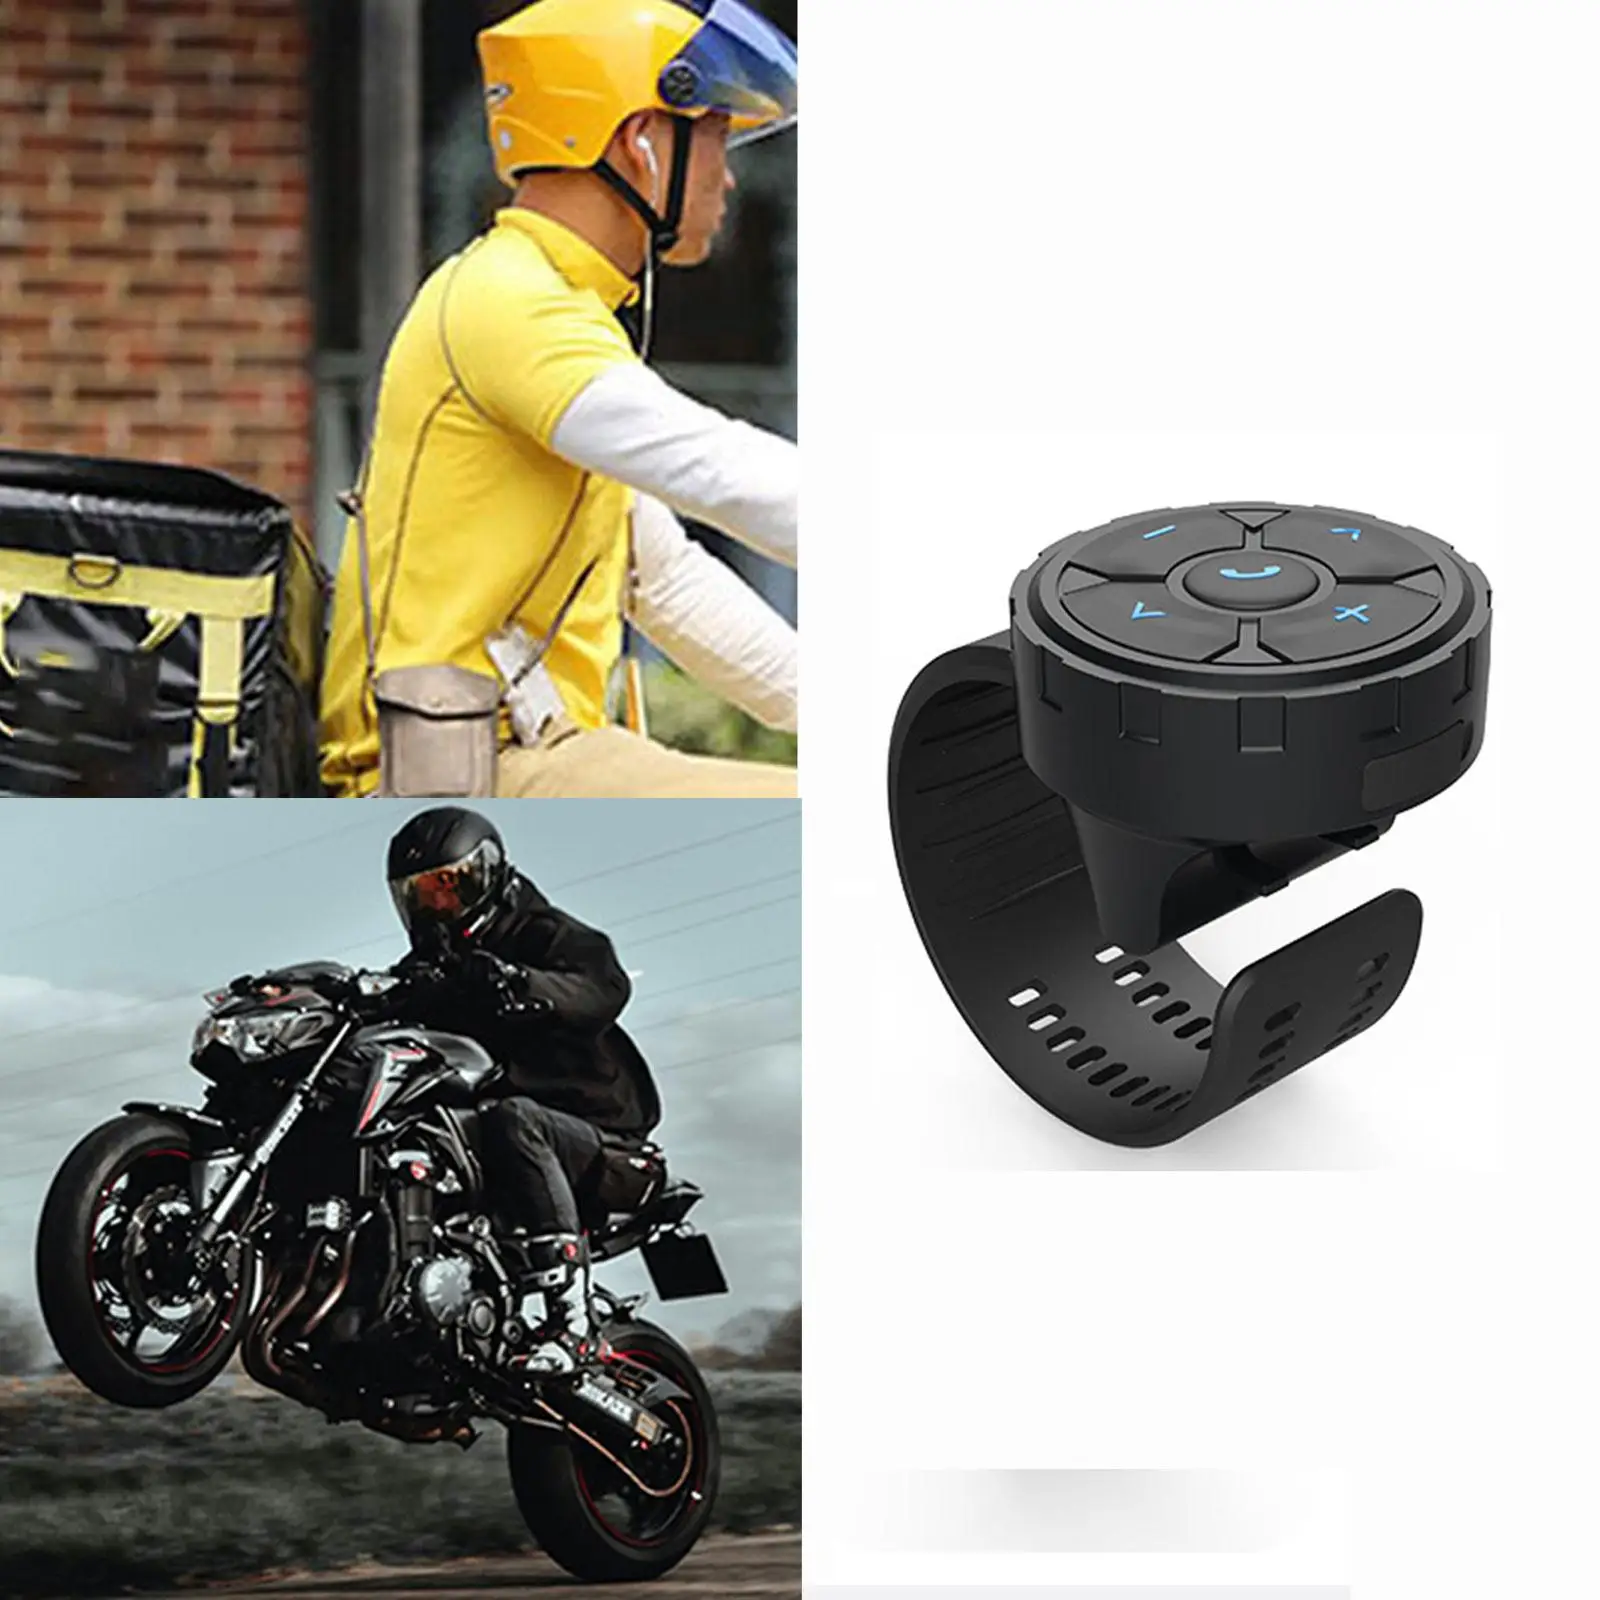 Steering Wheel Remote Control Styling Kit Multifunctional for Bike Phone